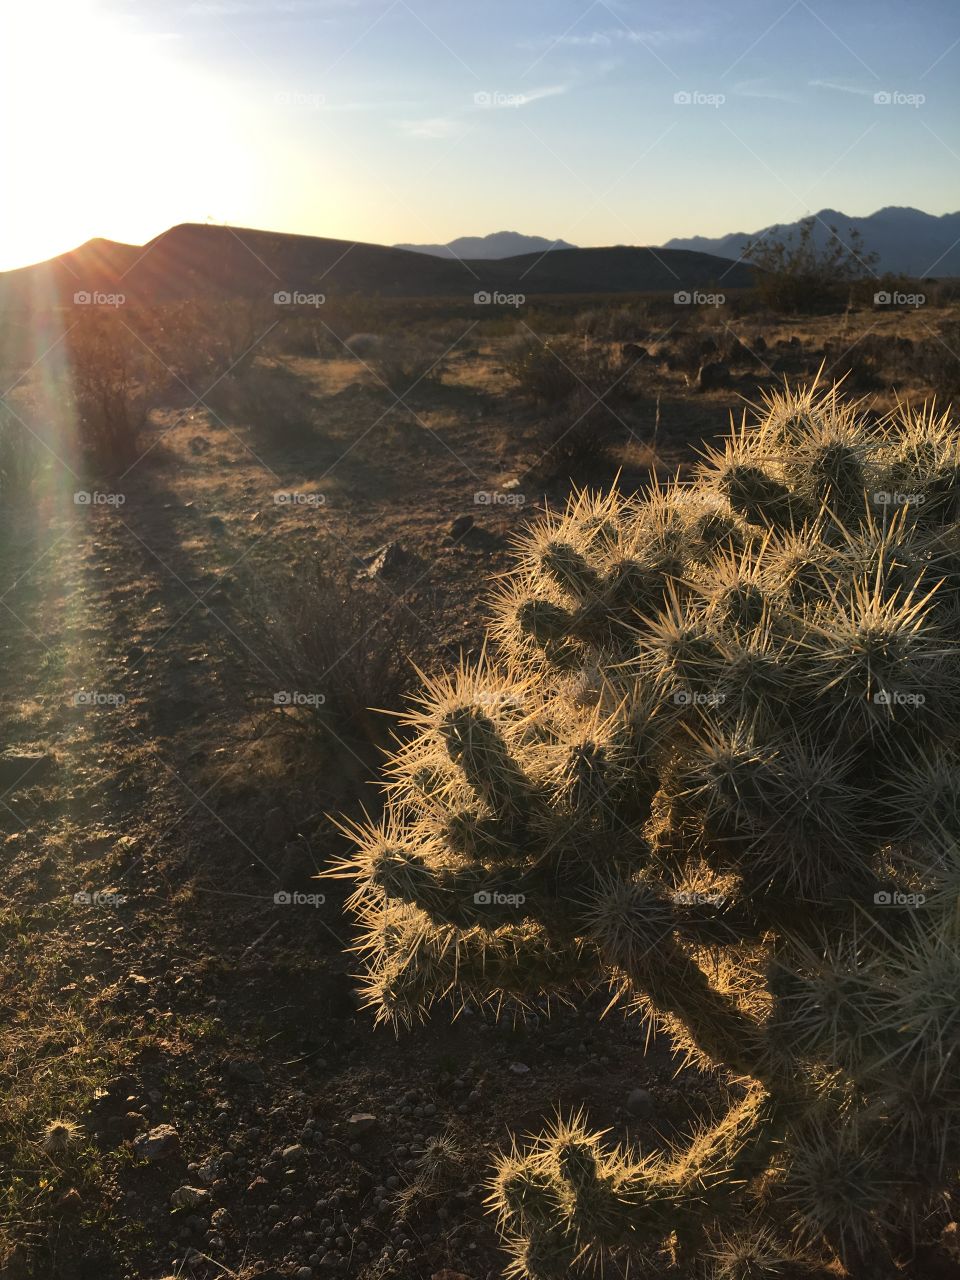 Mojave desert - cactus 